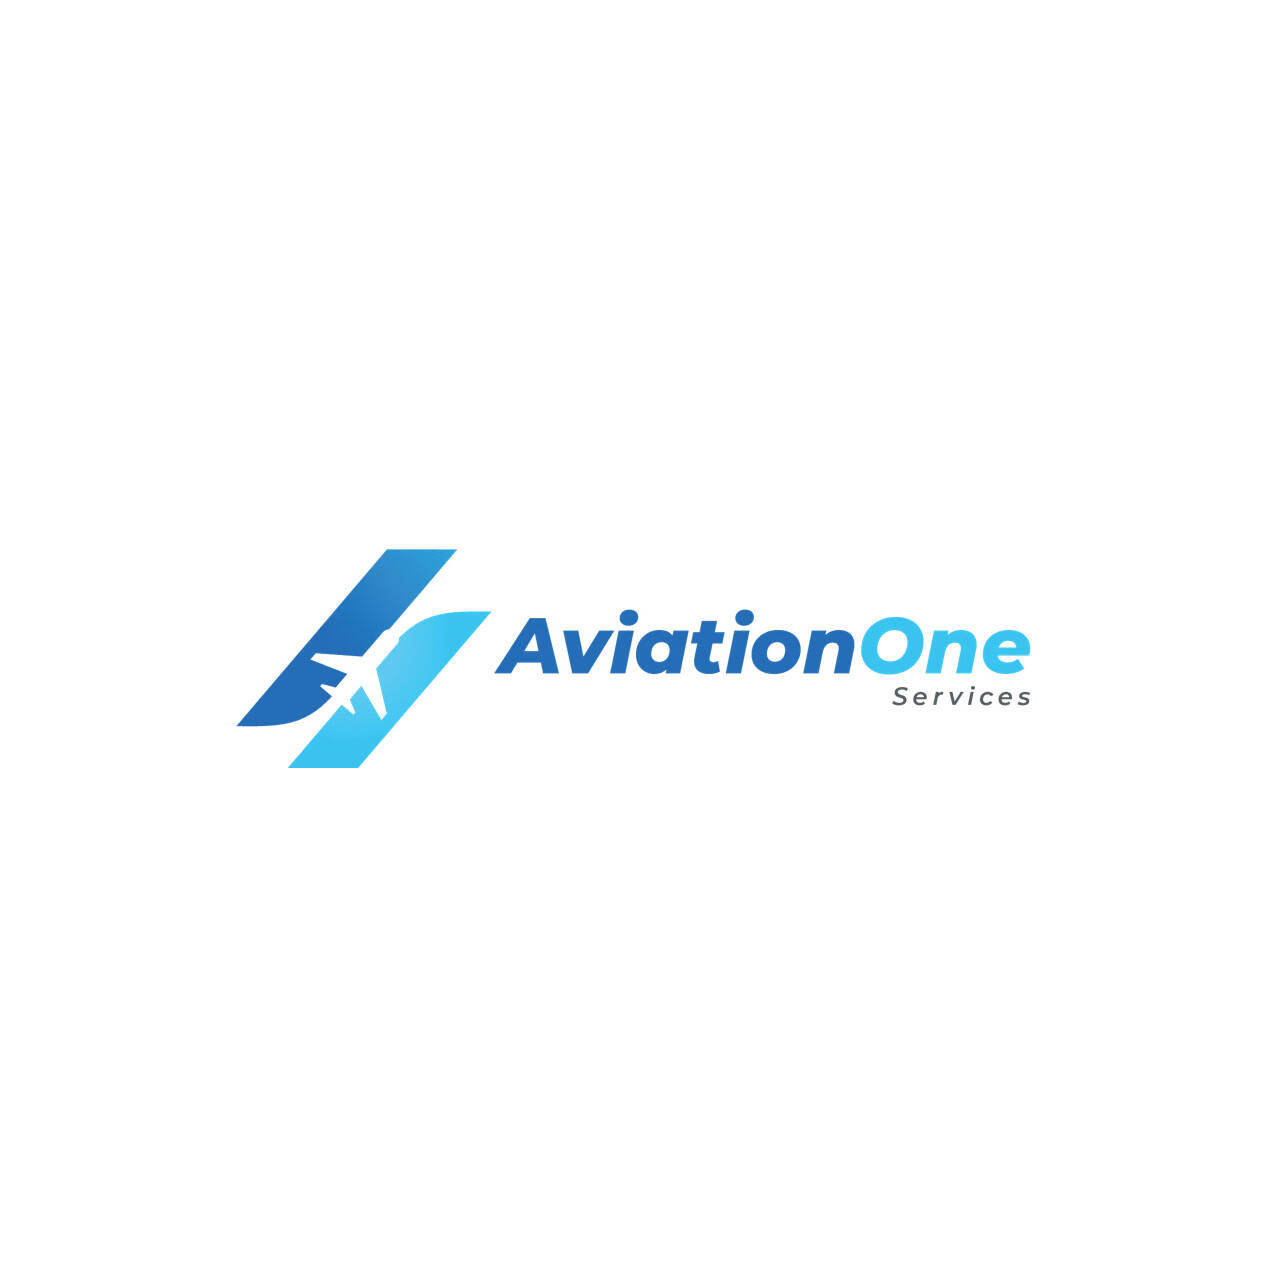 Aviation One